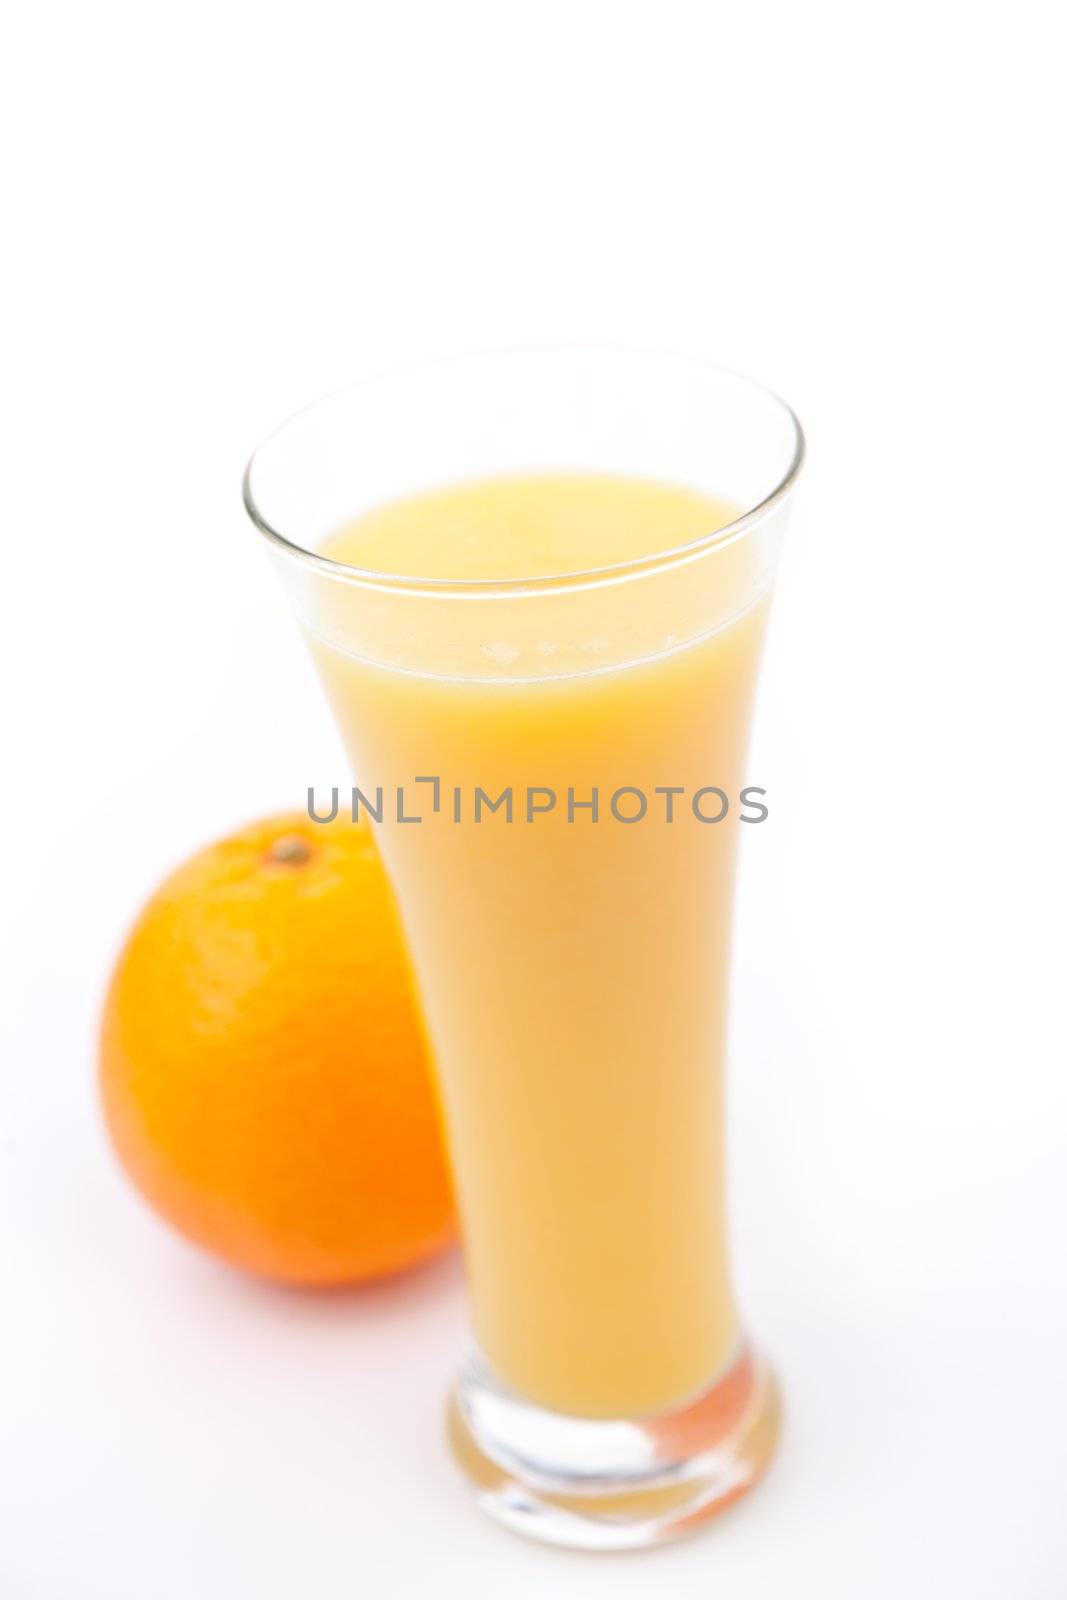 Orange behind a full glass of orange juice against white background